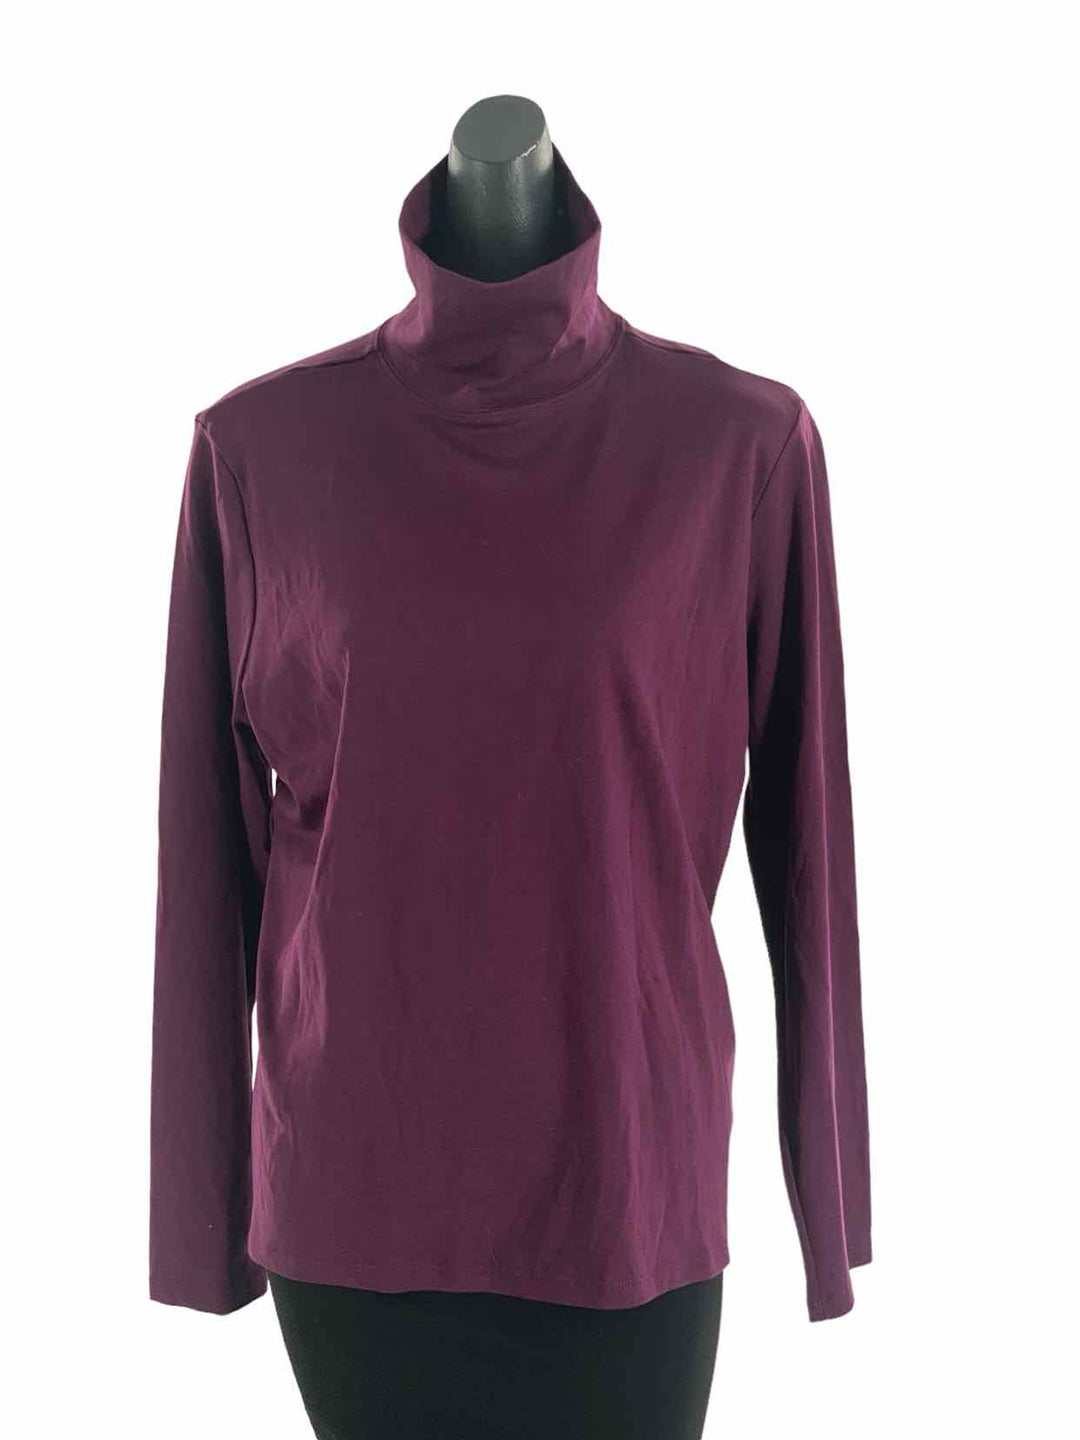 LL Bean Size XL Wine 100% cotton NWT Long Sleeve Shirts